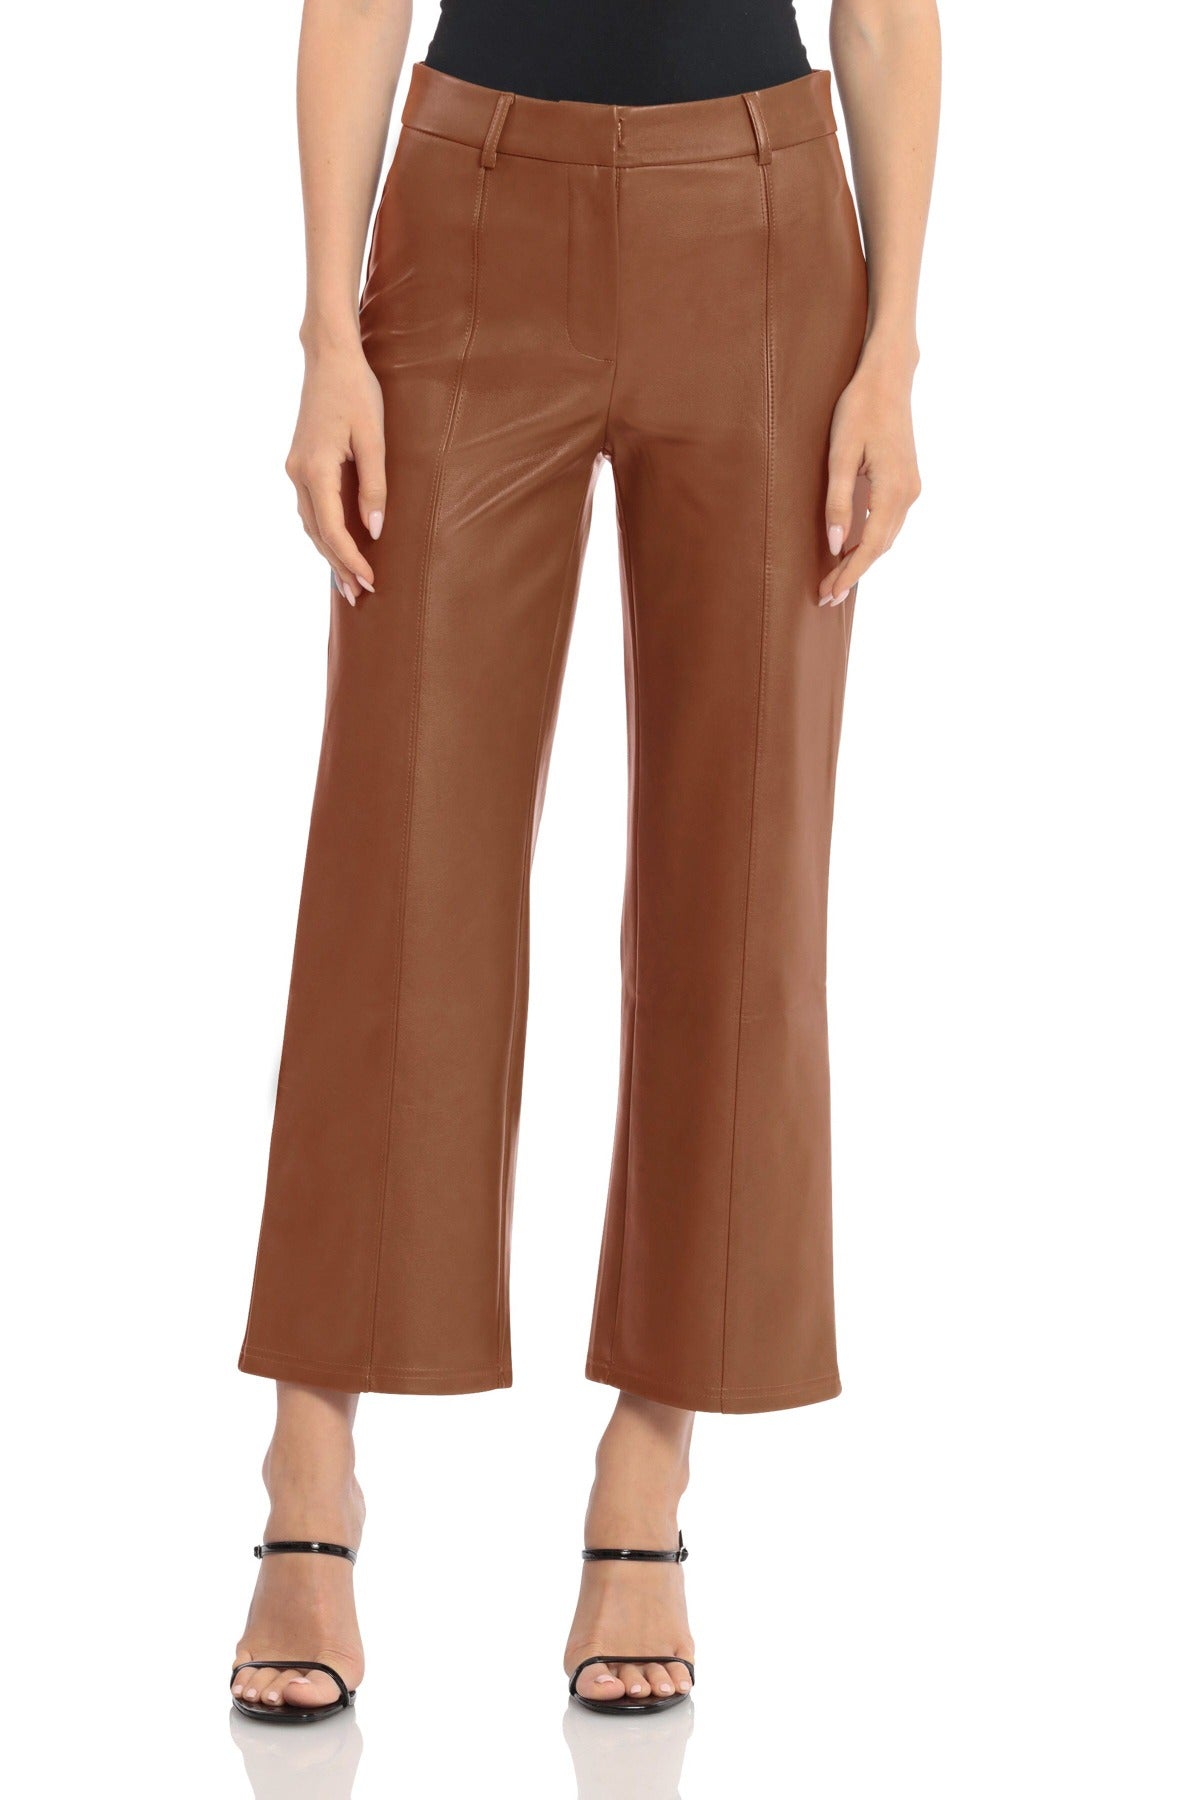 Faux Leather Seam-Front Straight Leg Trouser Pants Cognac Brown - Women's Figure Flattering Work Appropriate Bottoms